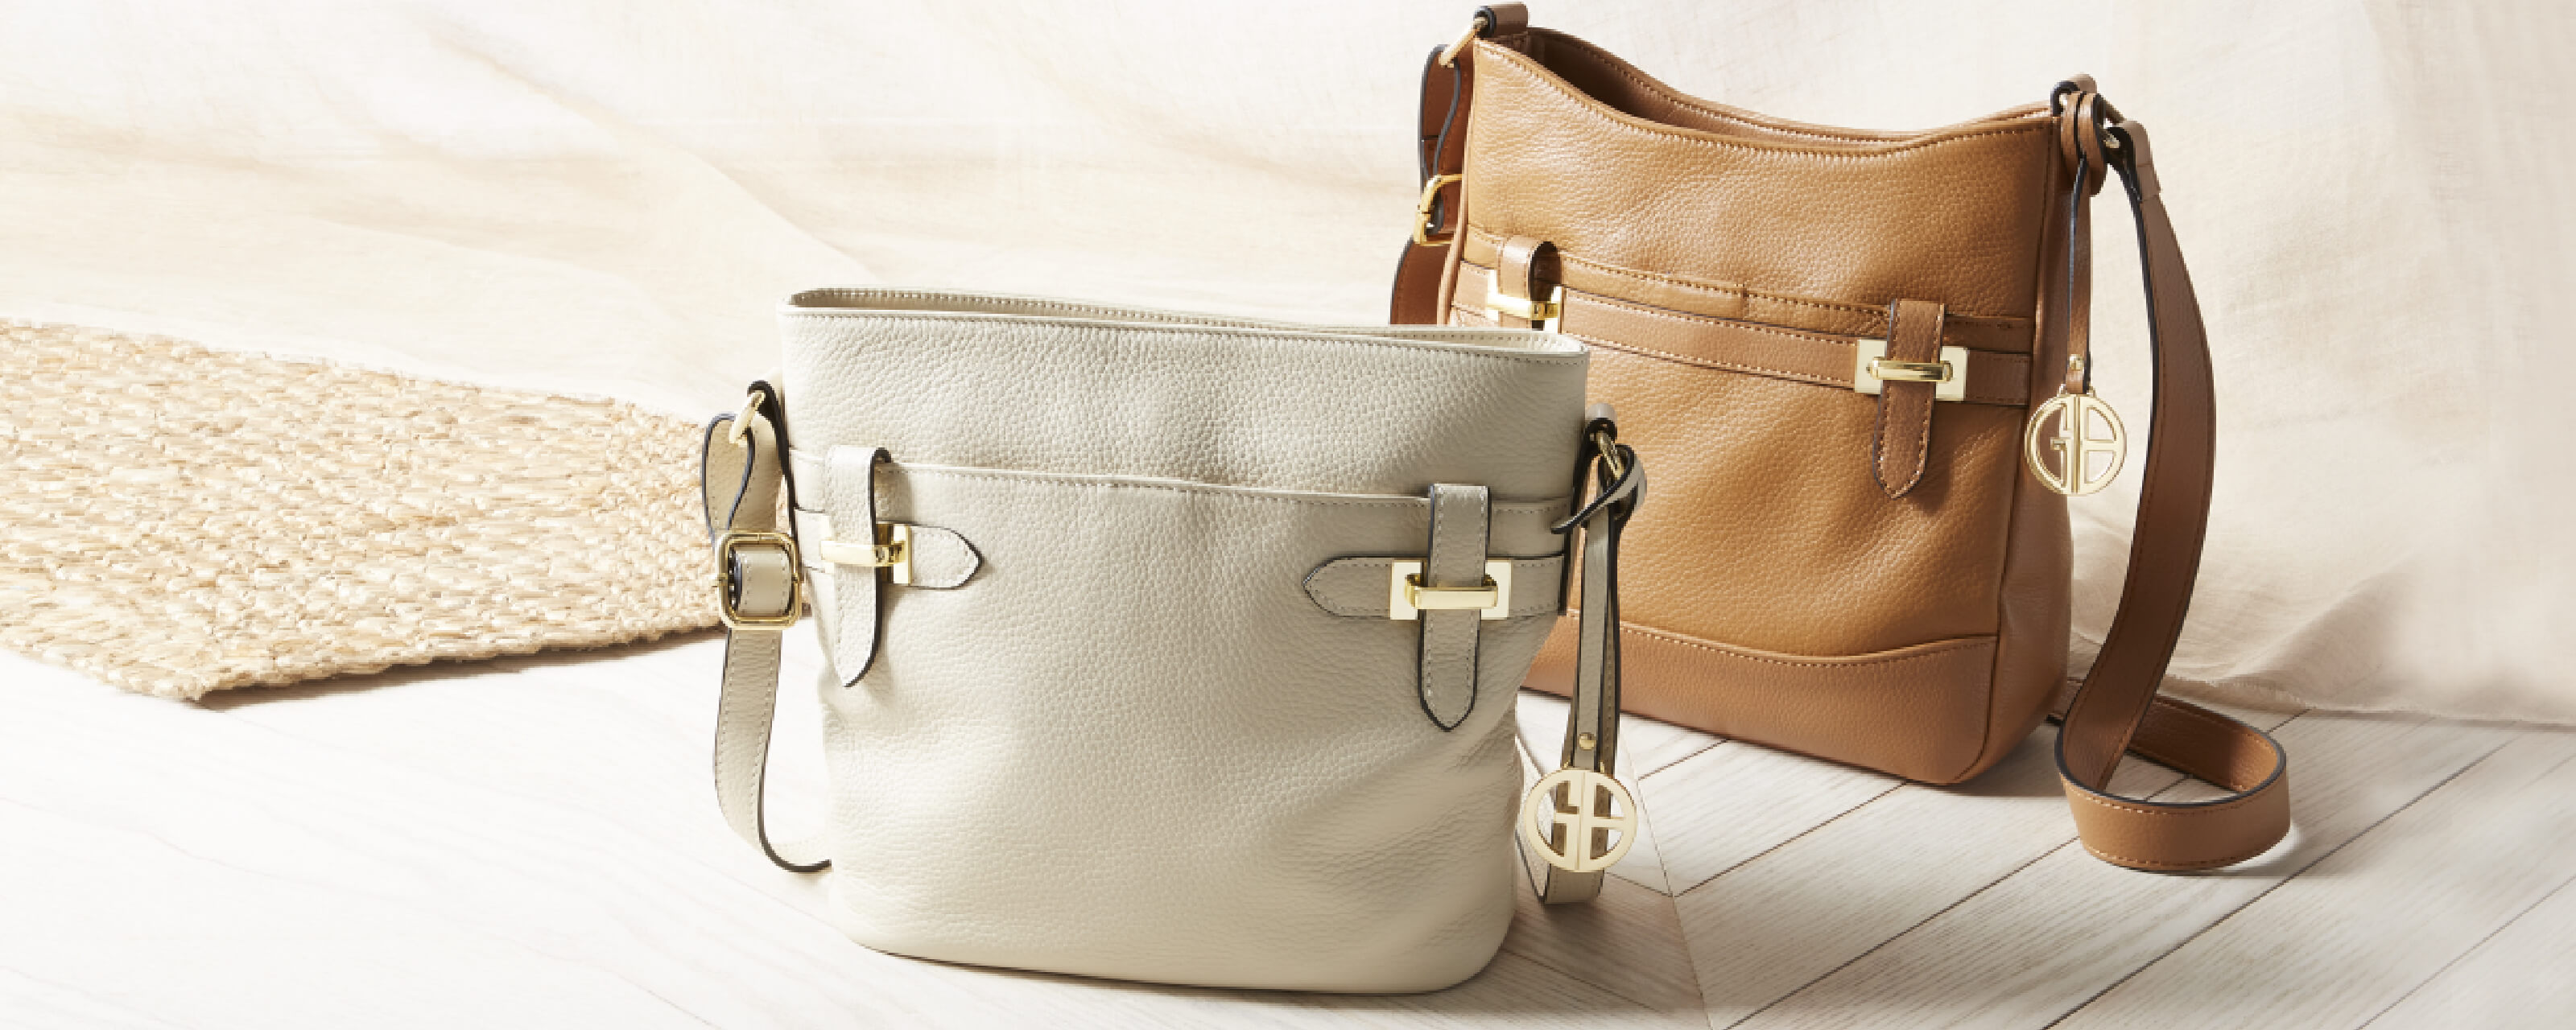 Gianni Bernini purse | Leather, Purses, Purse brands